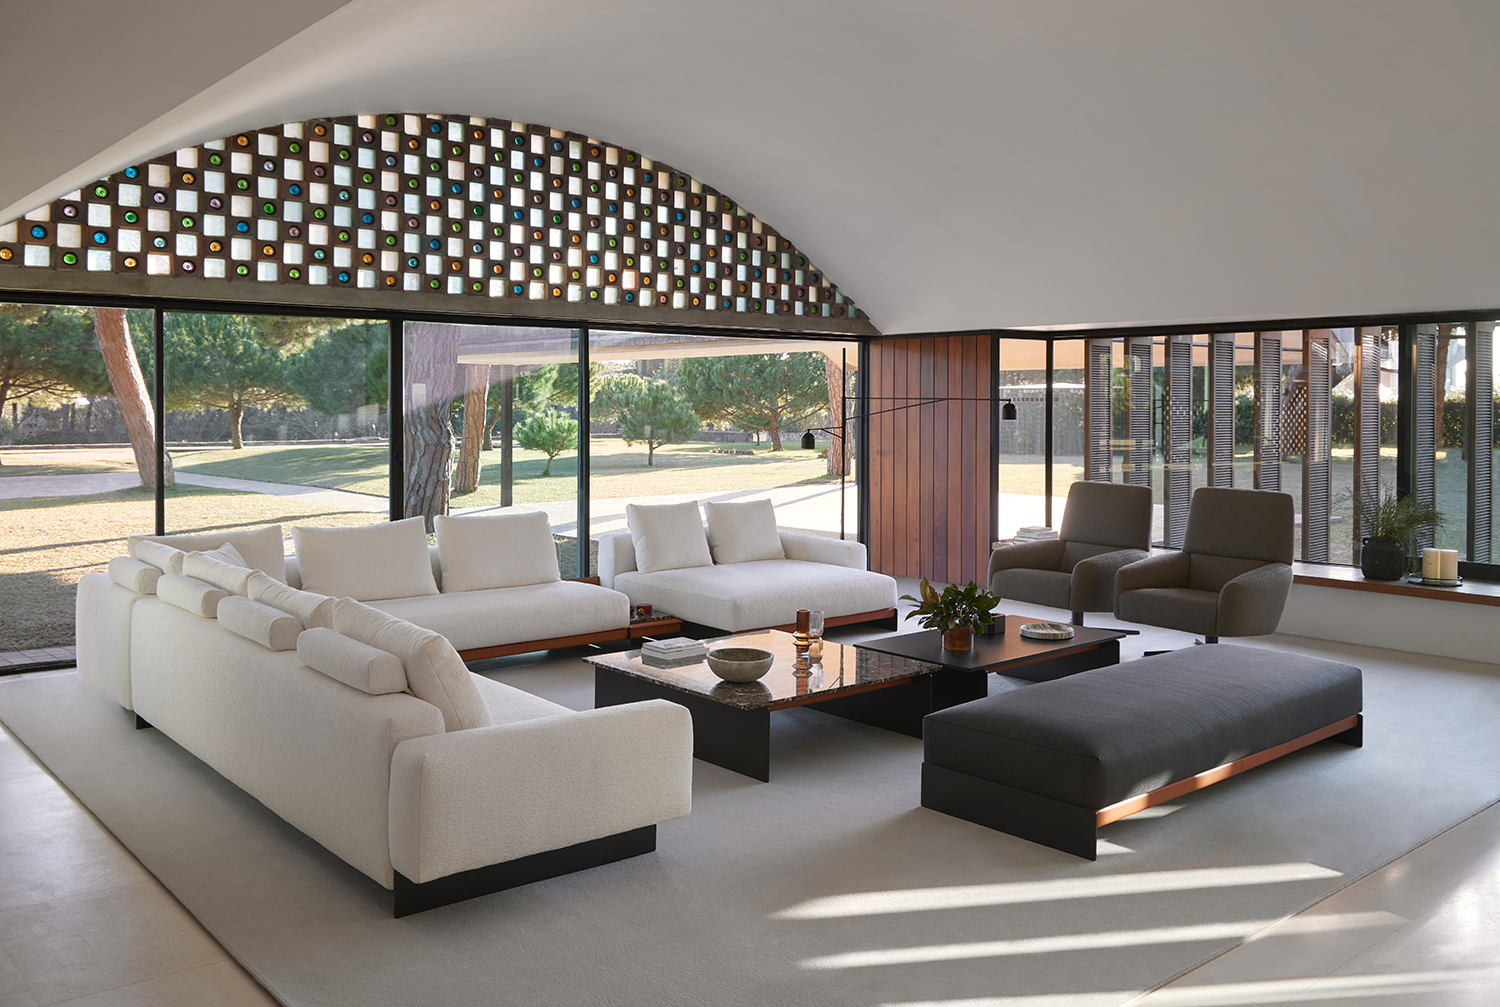 Sledd sofa collection by Mario Ruiz for Joquer